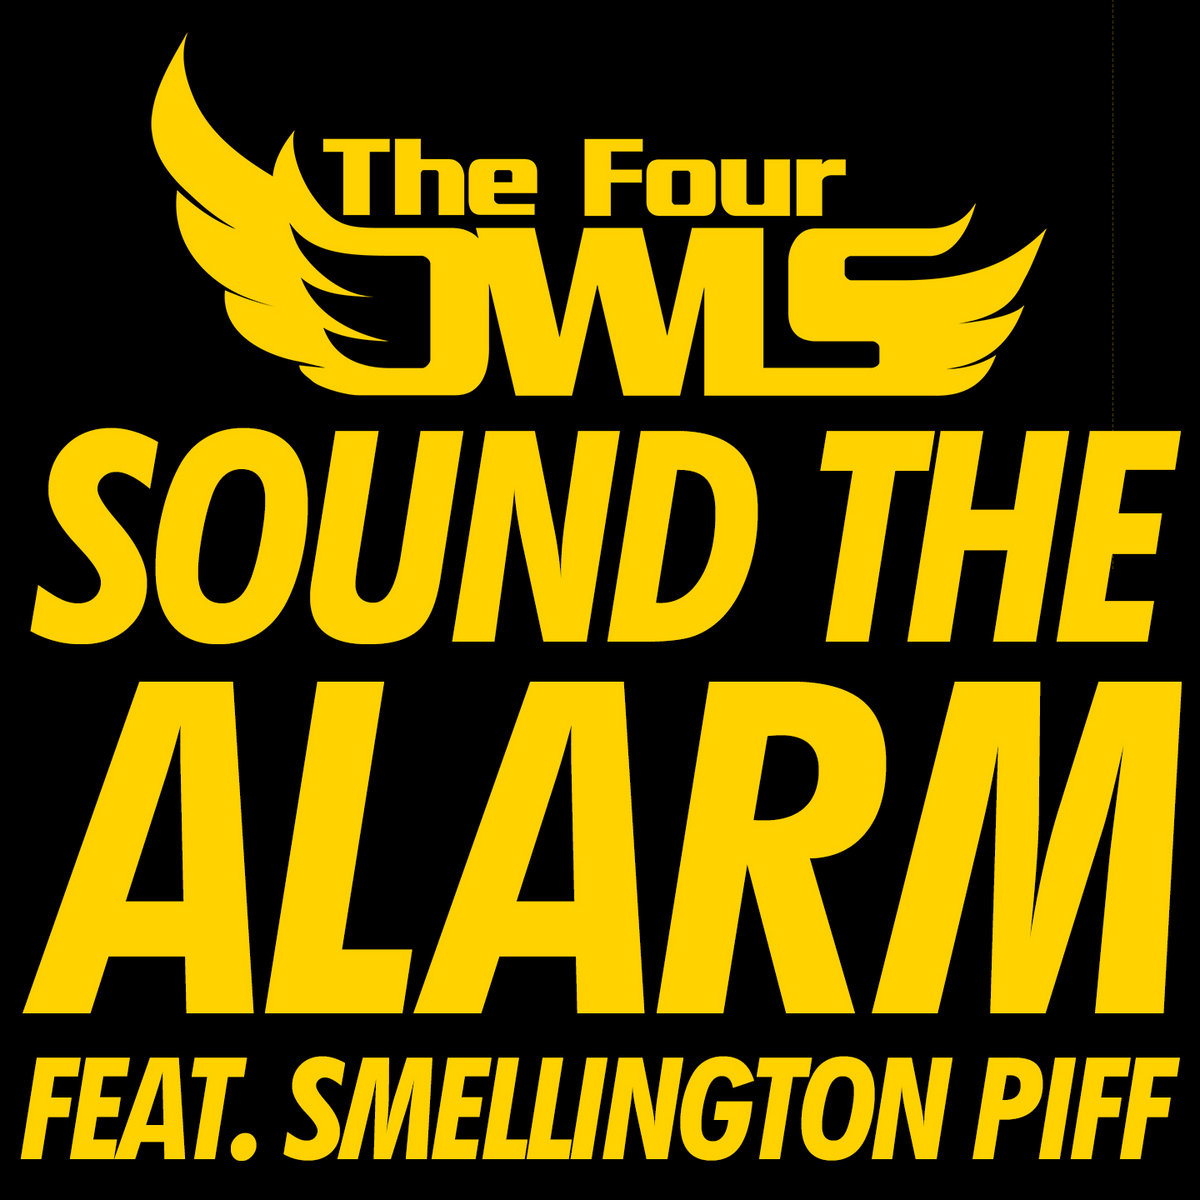 Sound_the_alarm_the_four_owls